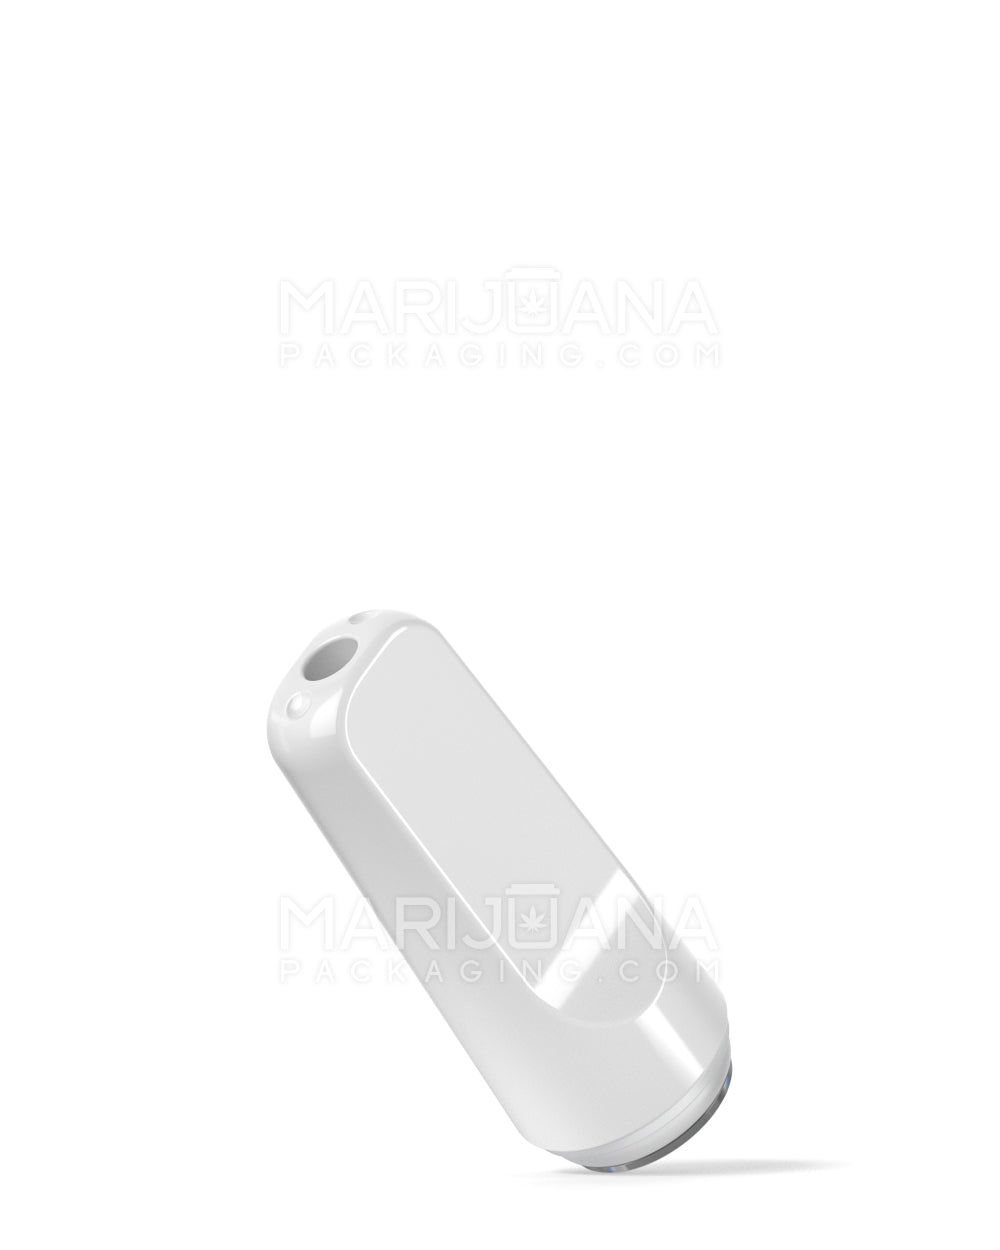 RAE | Flat Vape Mouthpiece for Hand Press Plastic Cartridges | White Plastic - Hand Press - 400 Count - 4